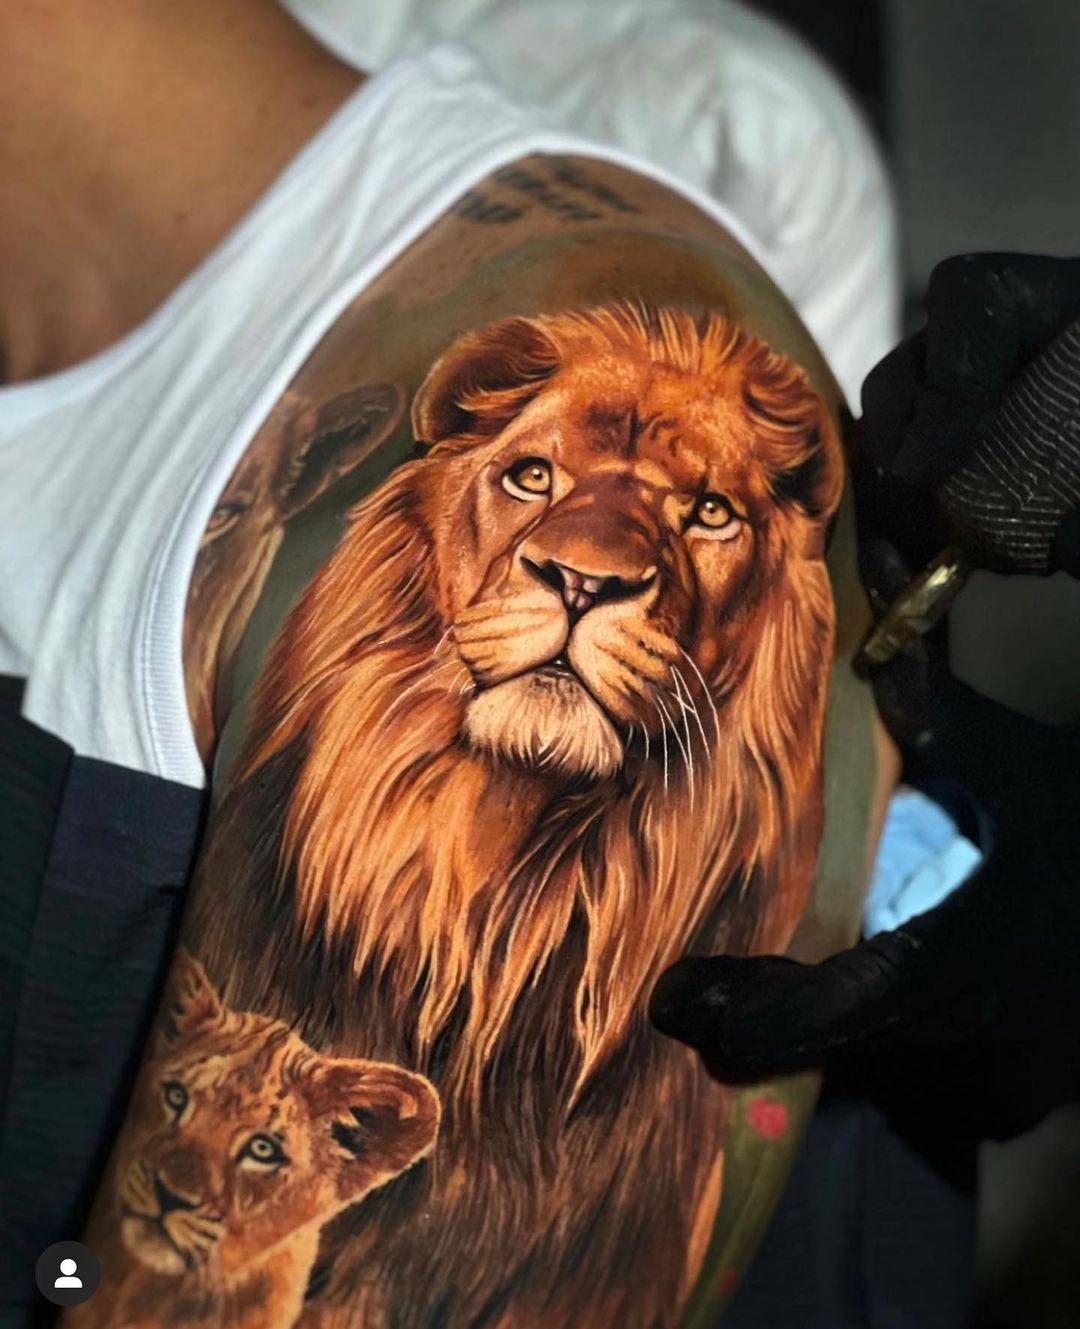 Lion Tattoo - Black and Grey by imarowski on DeviantArt